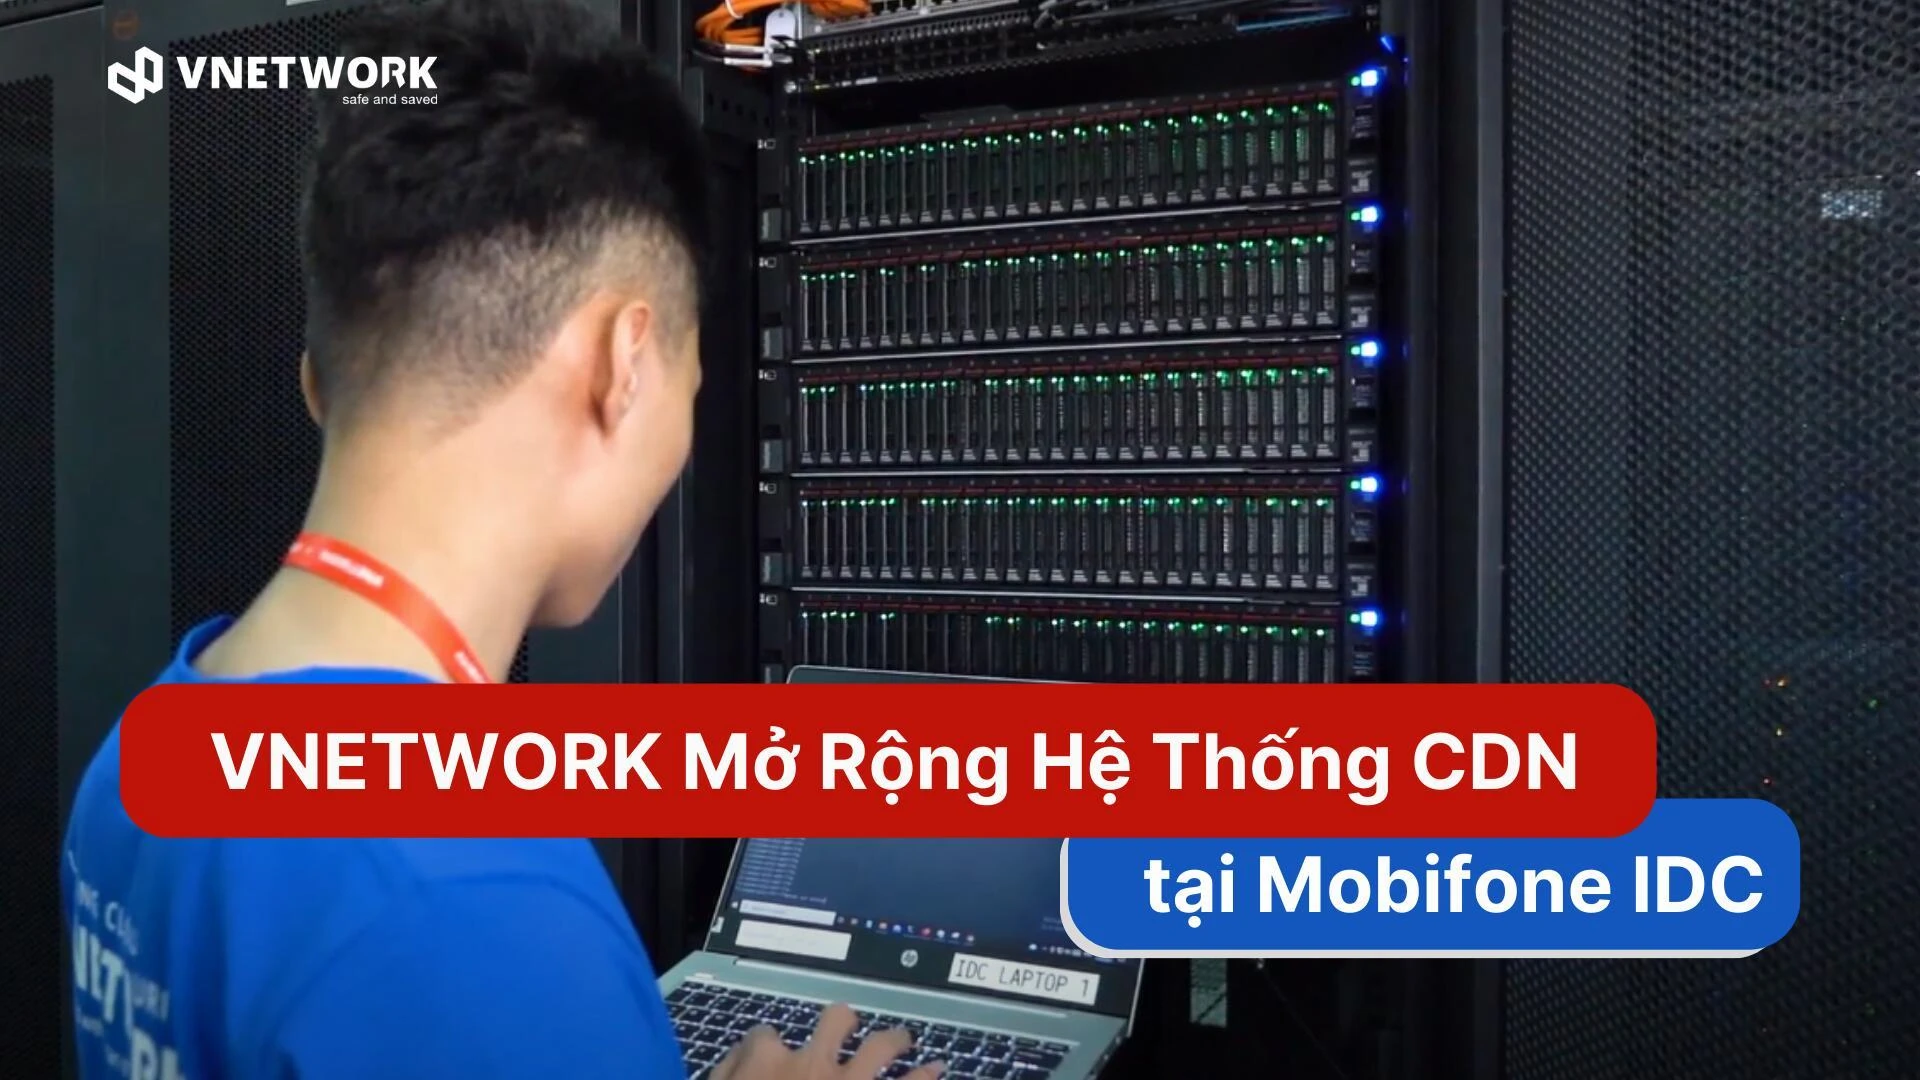 VNETWORK expands CDN network at Mobifone